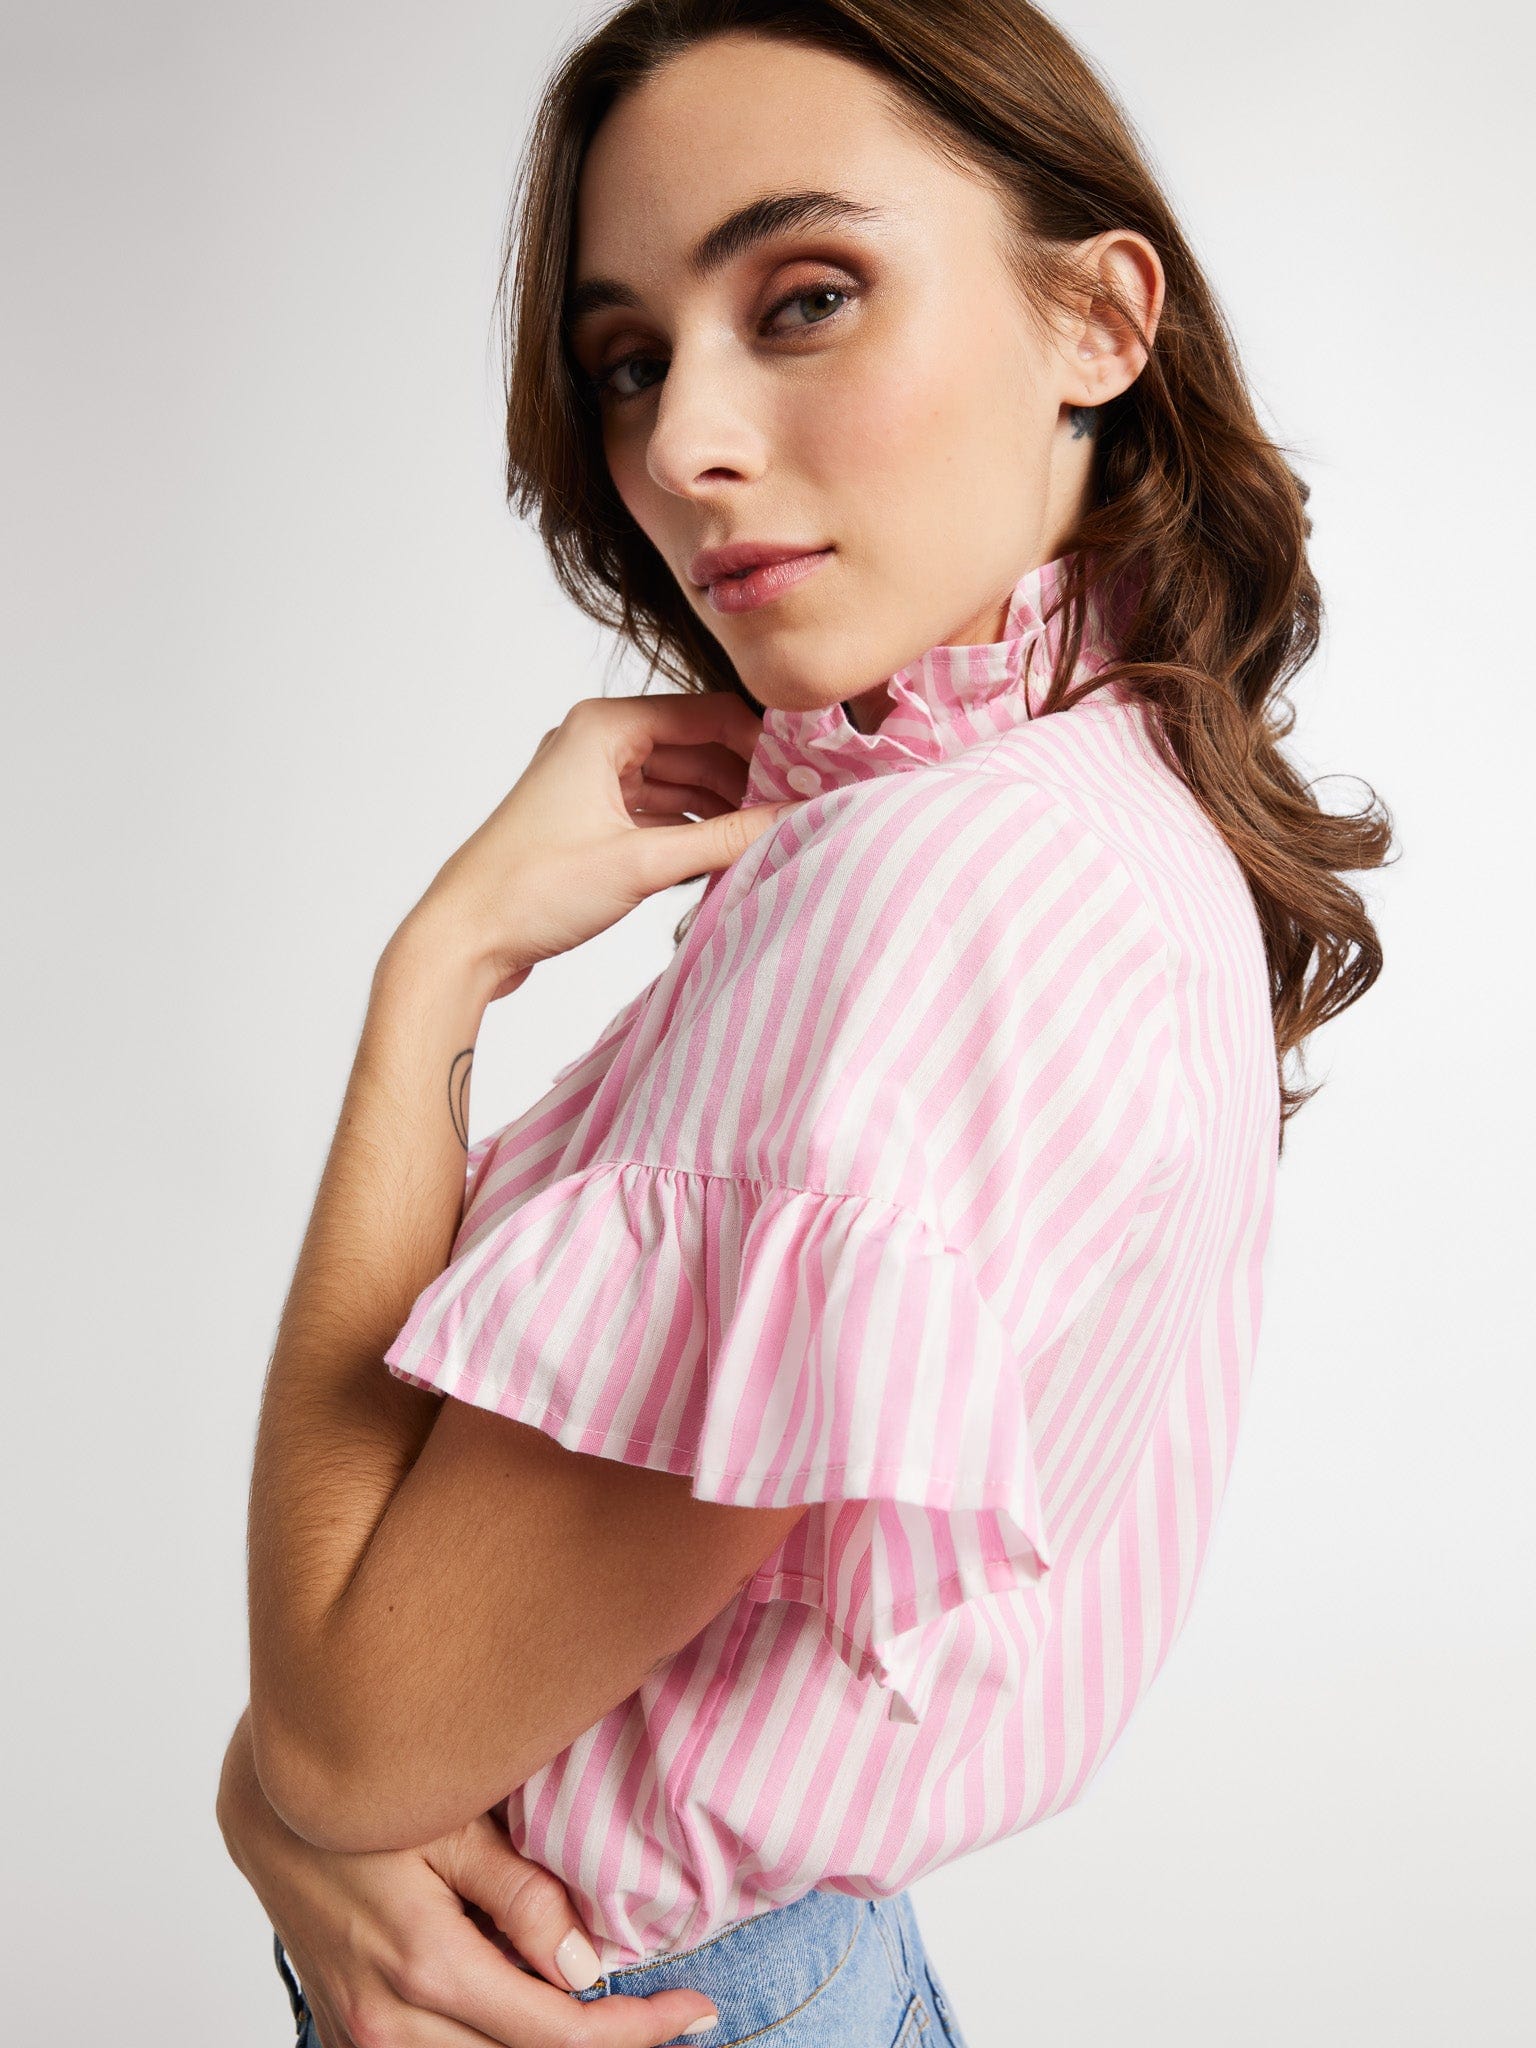 MILLE Clothing Vanessa Top in Bubblegum Stripe